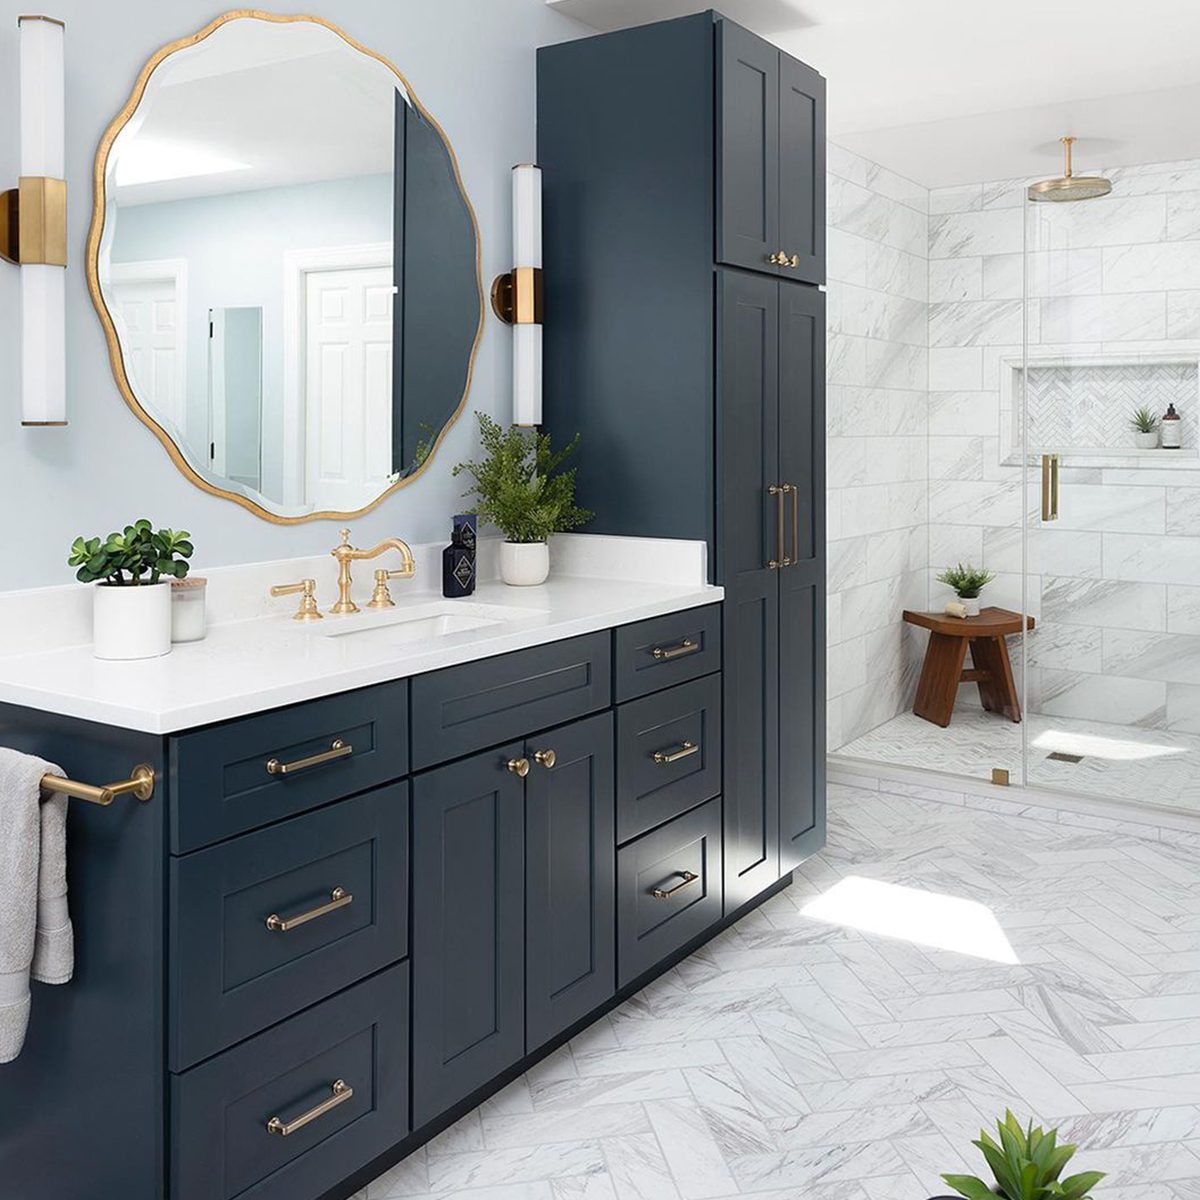 10 Blue Vanity Bathroom Ideas You’ll Love